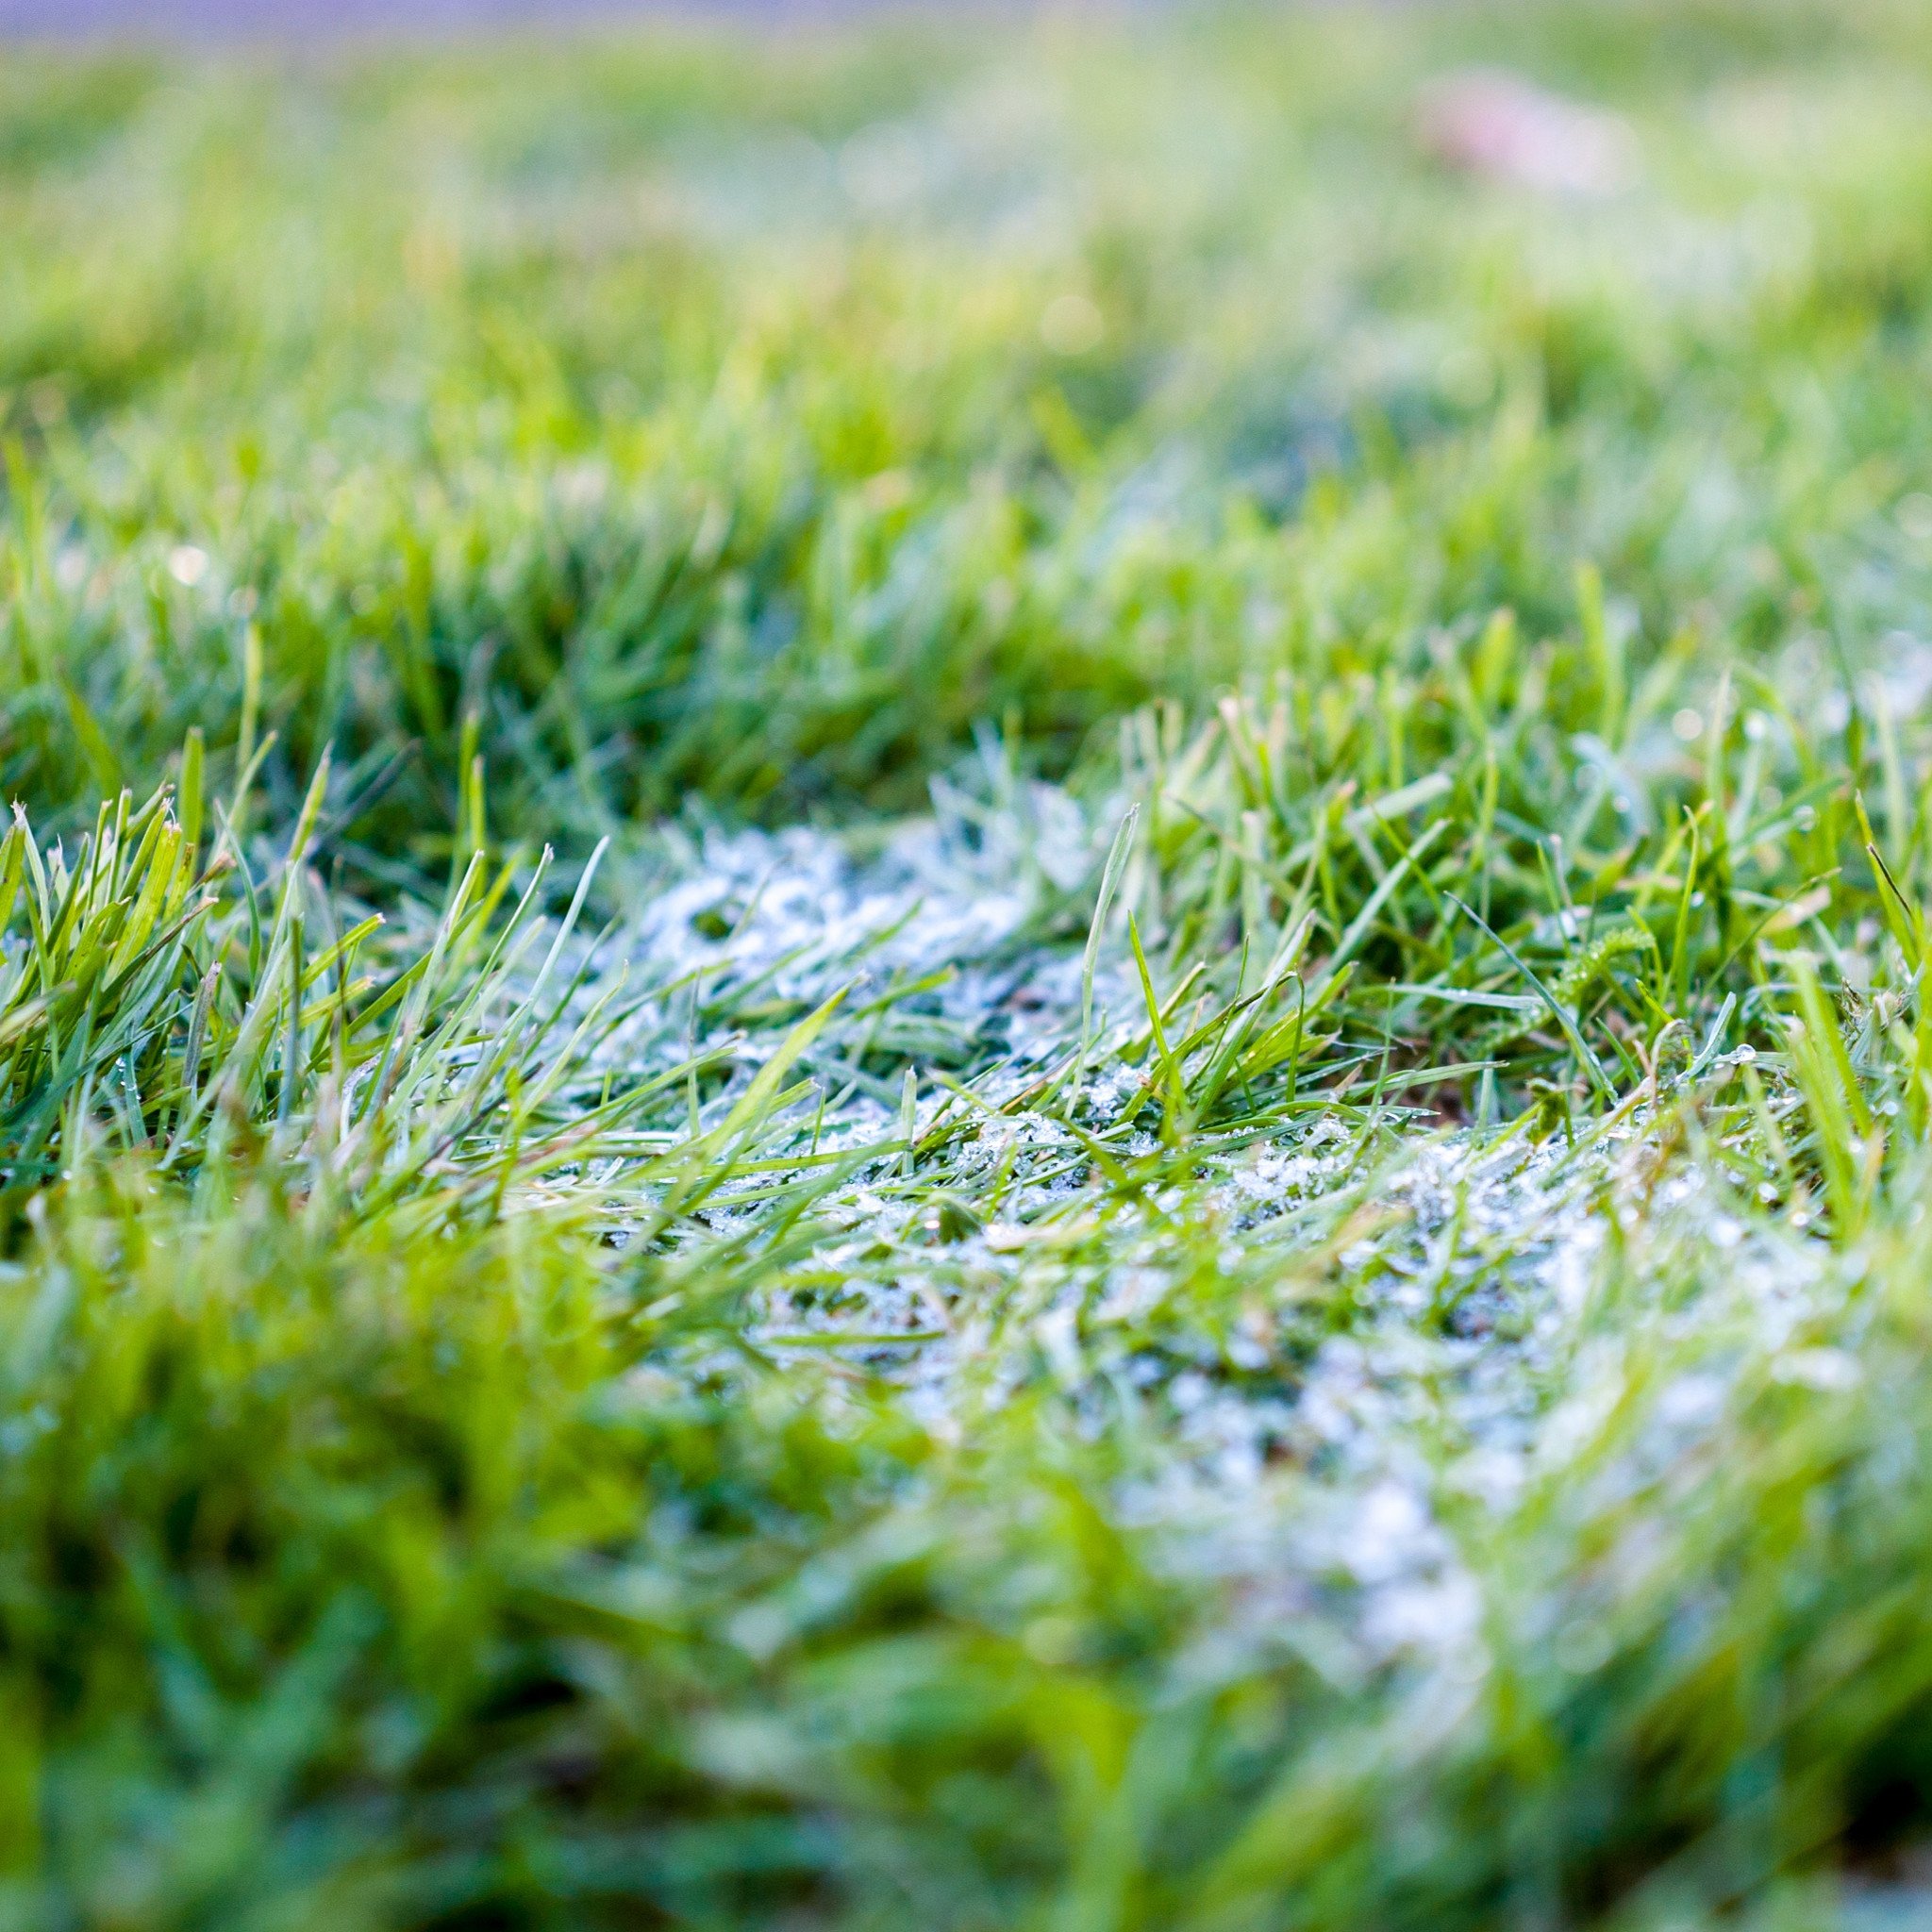 Avoid walking on frozen grass – Rexius